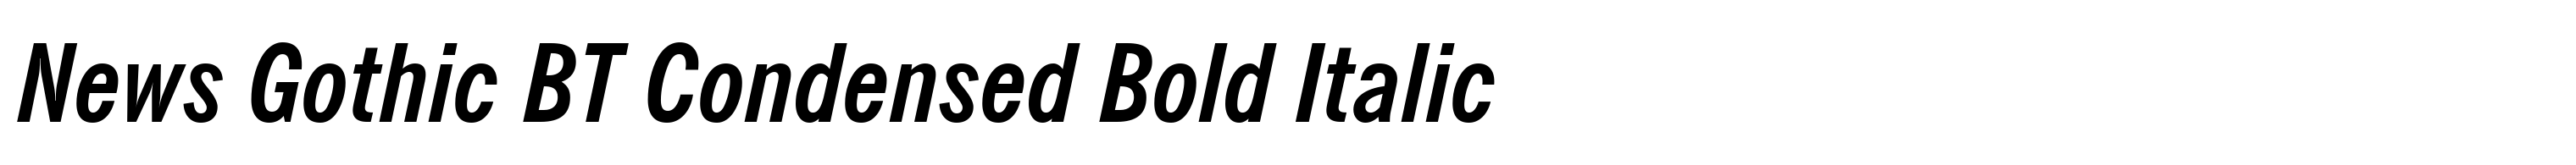 News Gothic BT Condensed Bold Italic